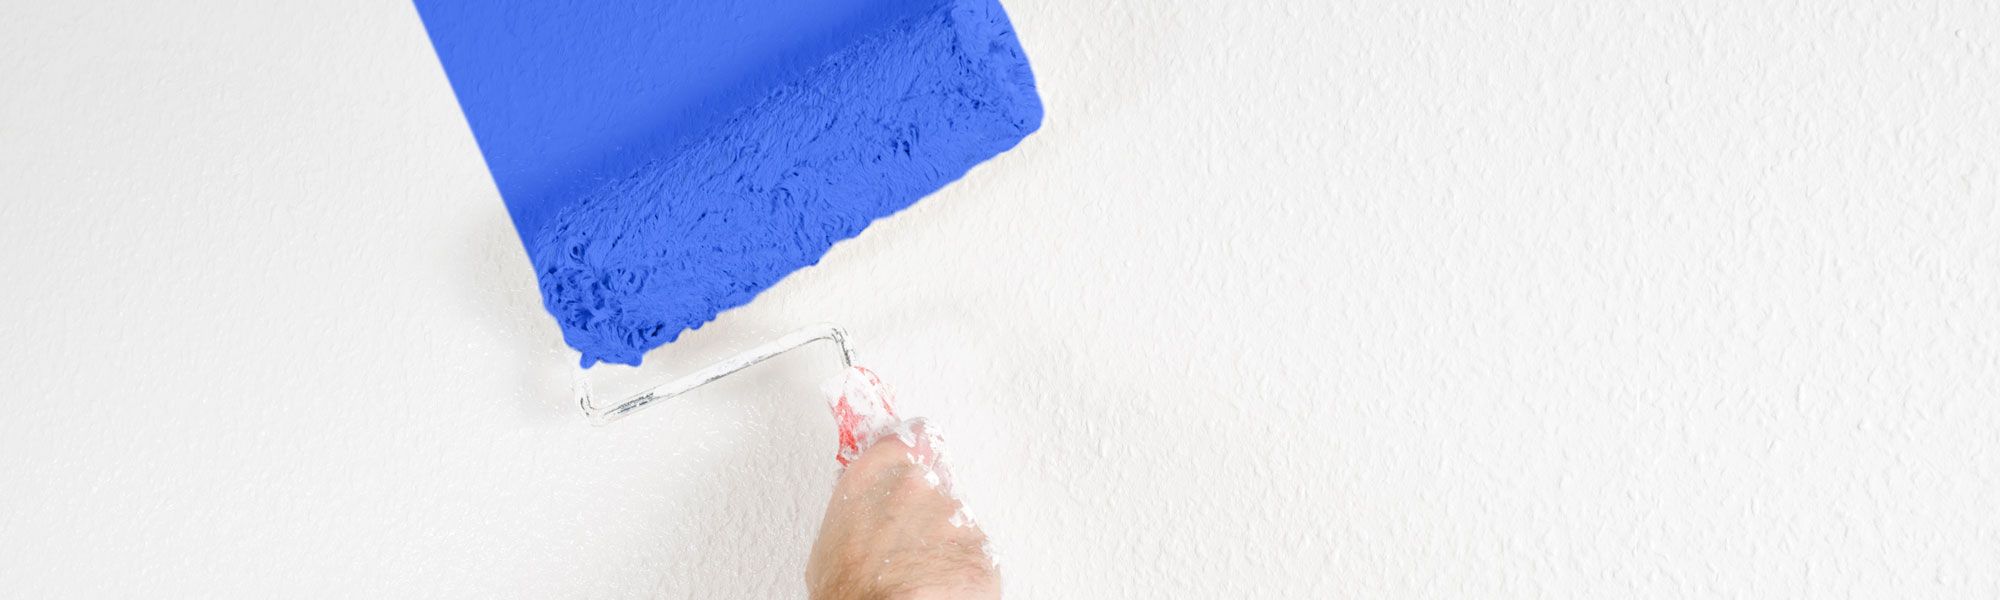 blaue Farbe - Maler Droll